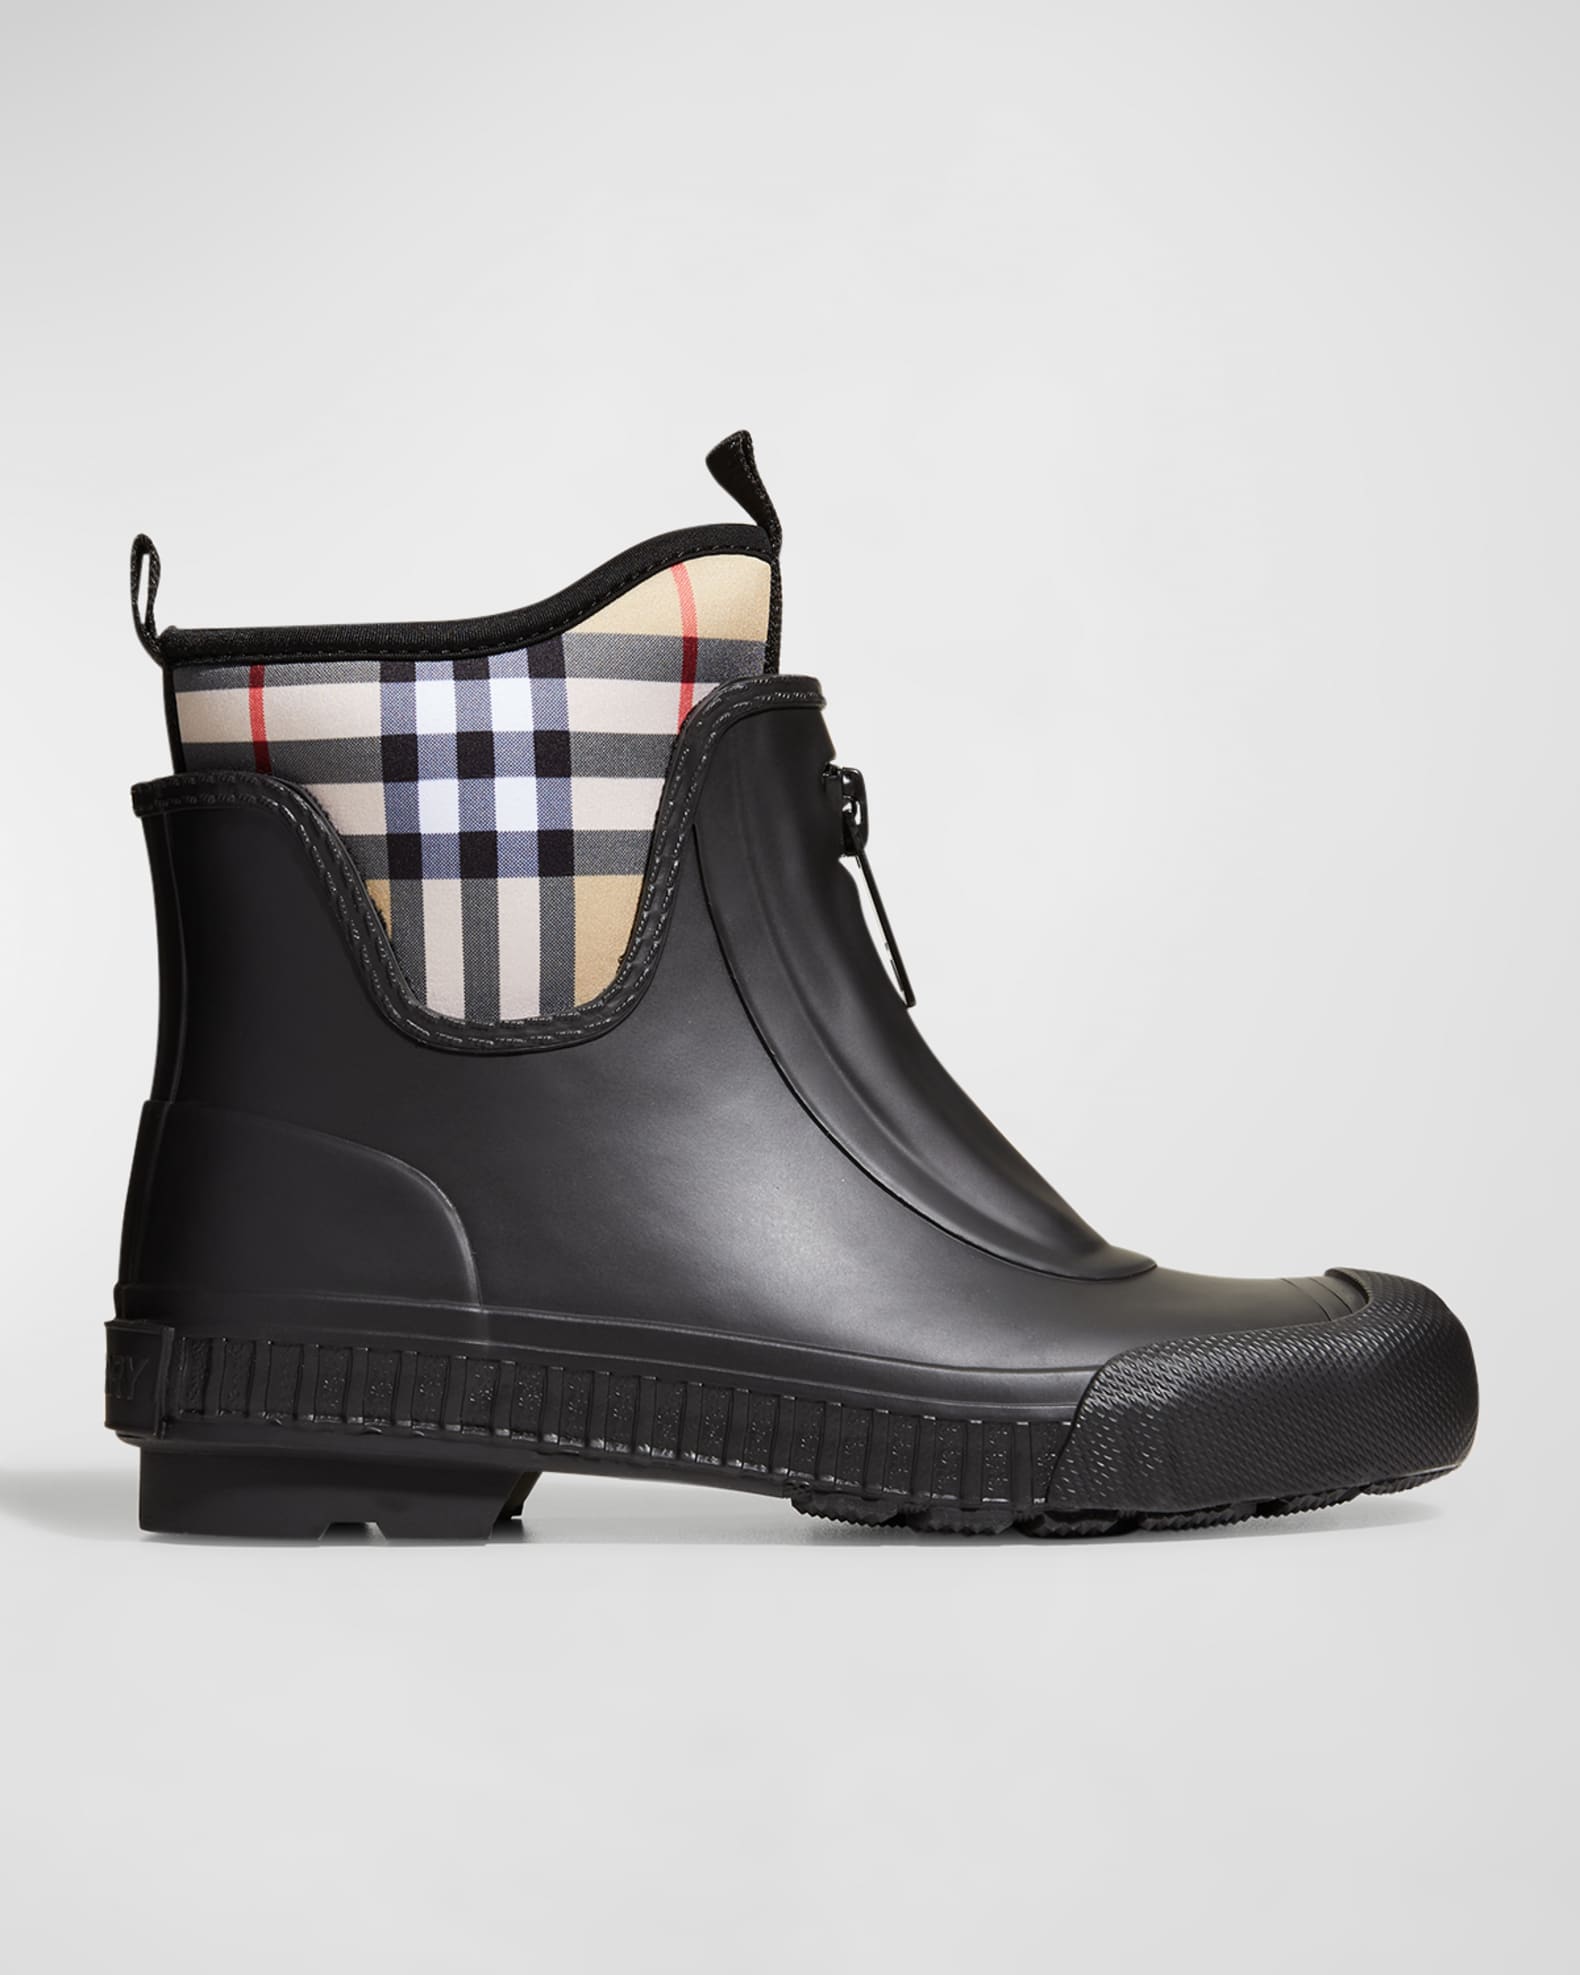 Stylish Monsoons: Flinton Check Waterproof Rain Boots By Burberry ...